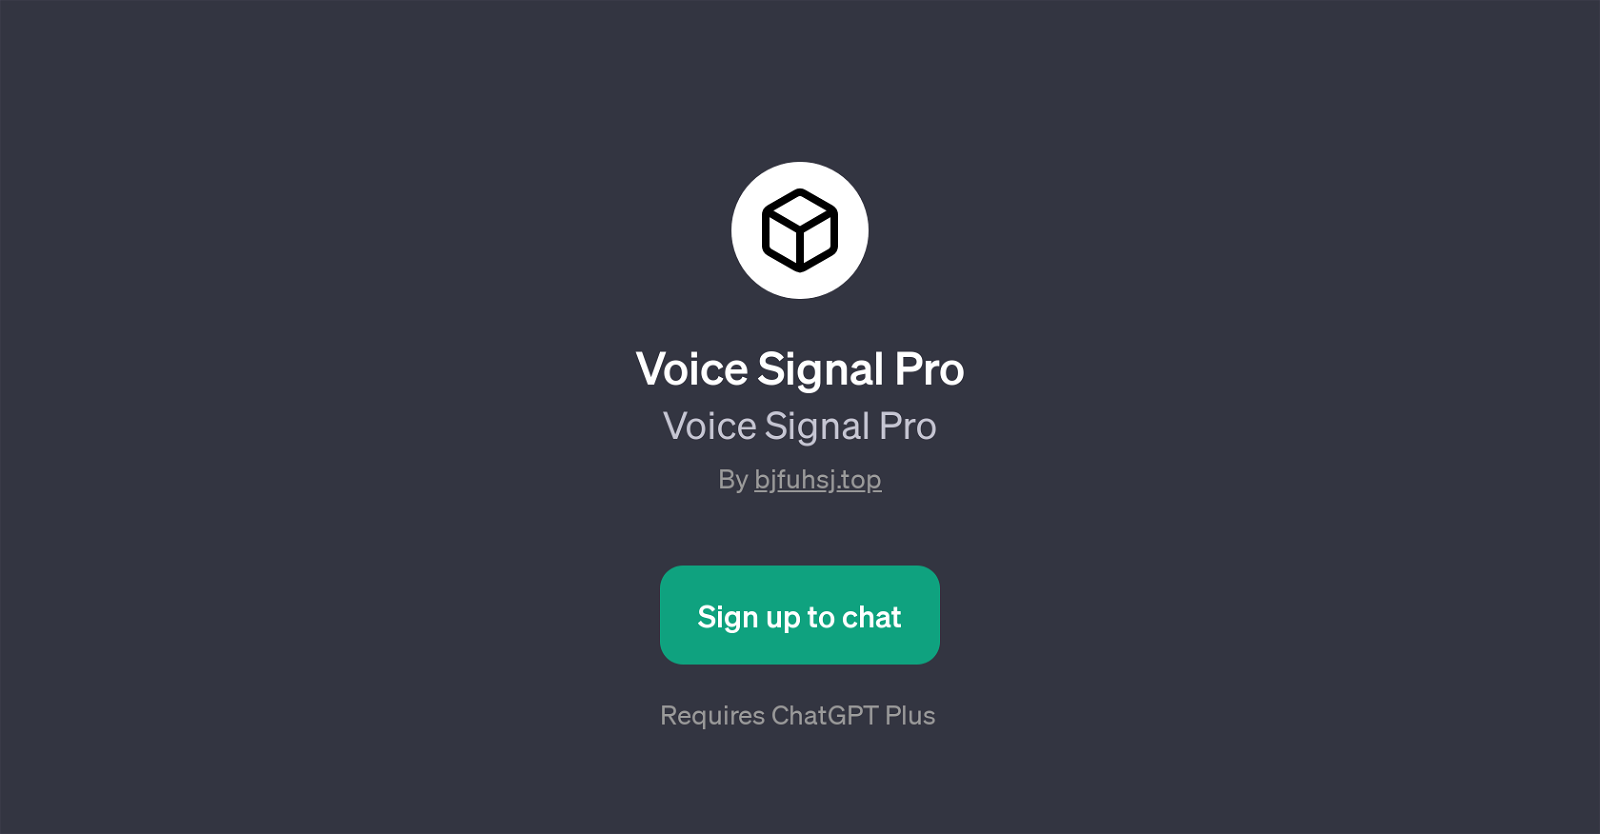 Voice Signal Pro website